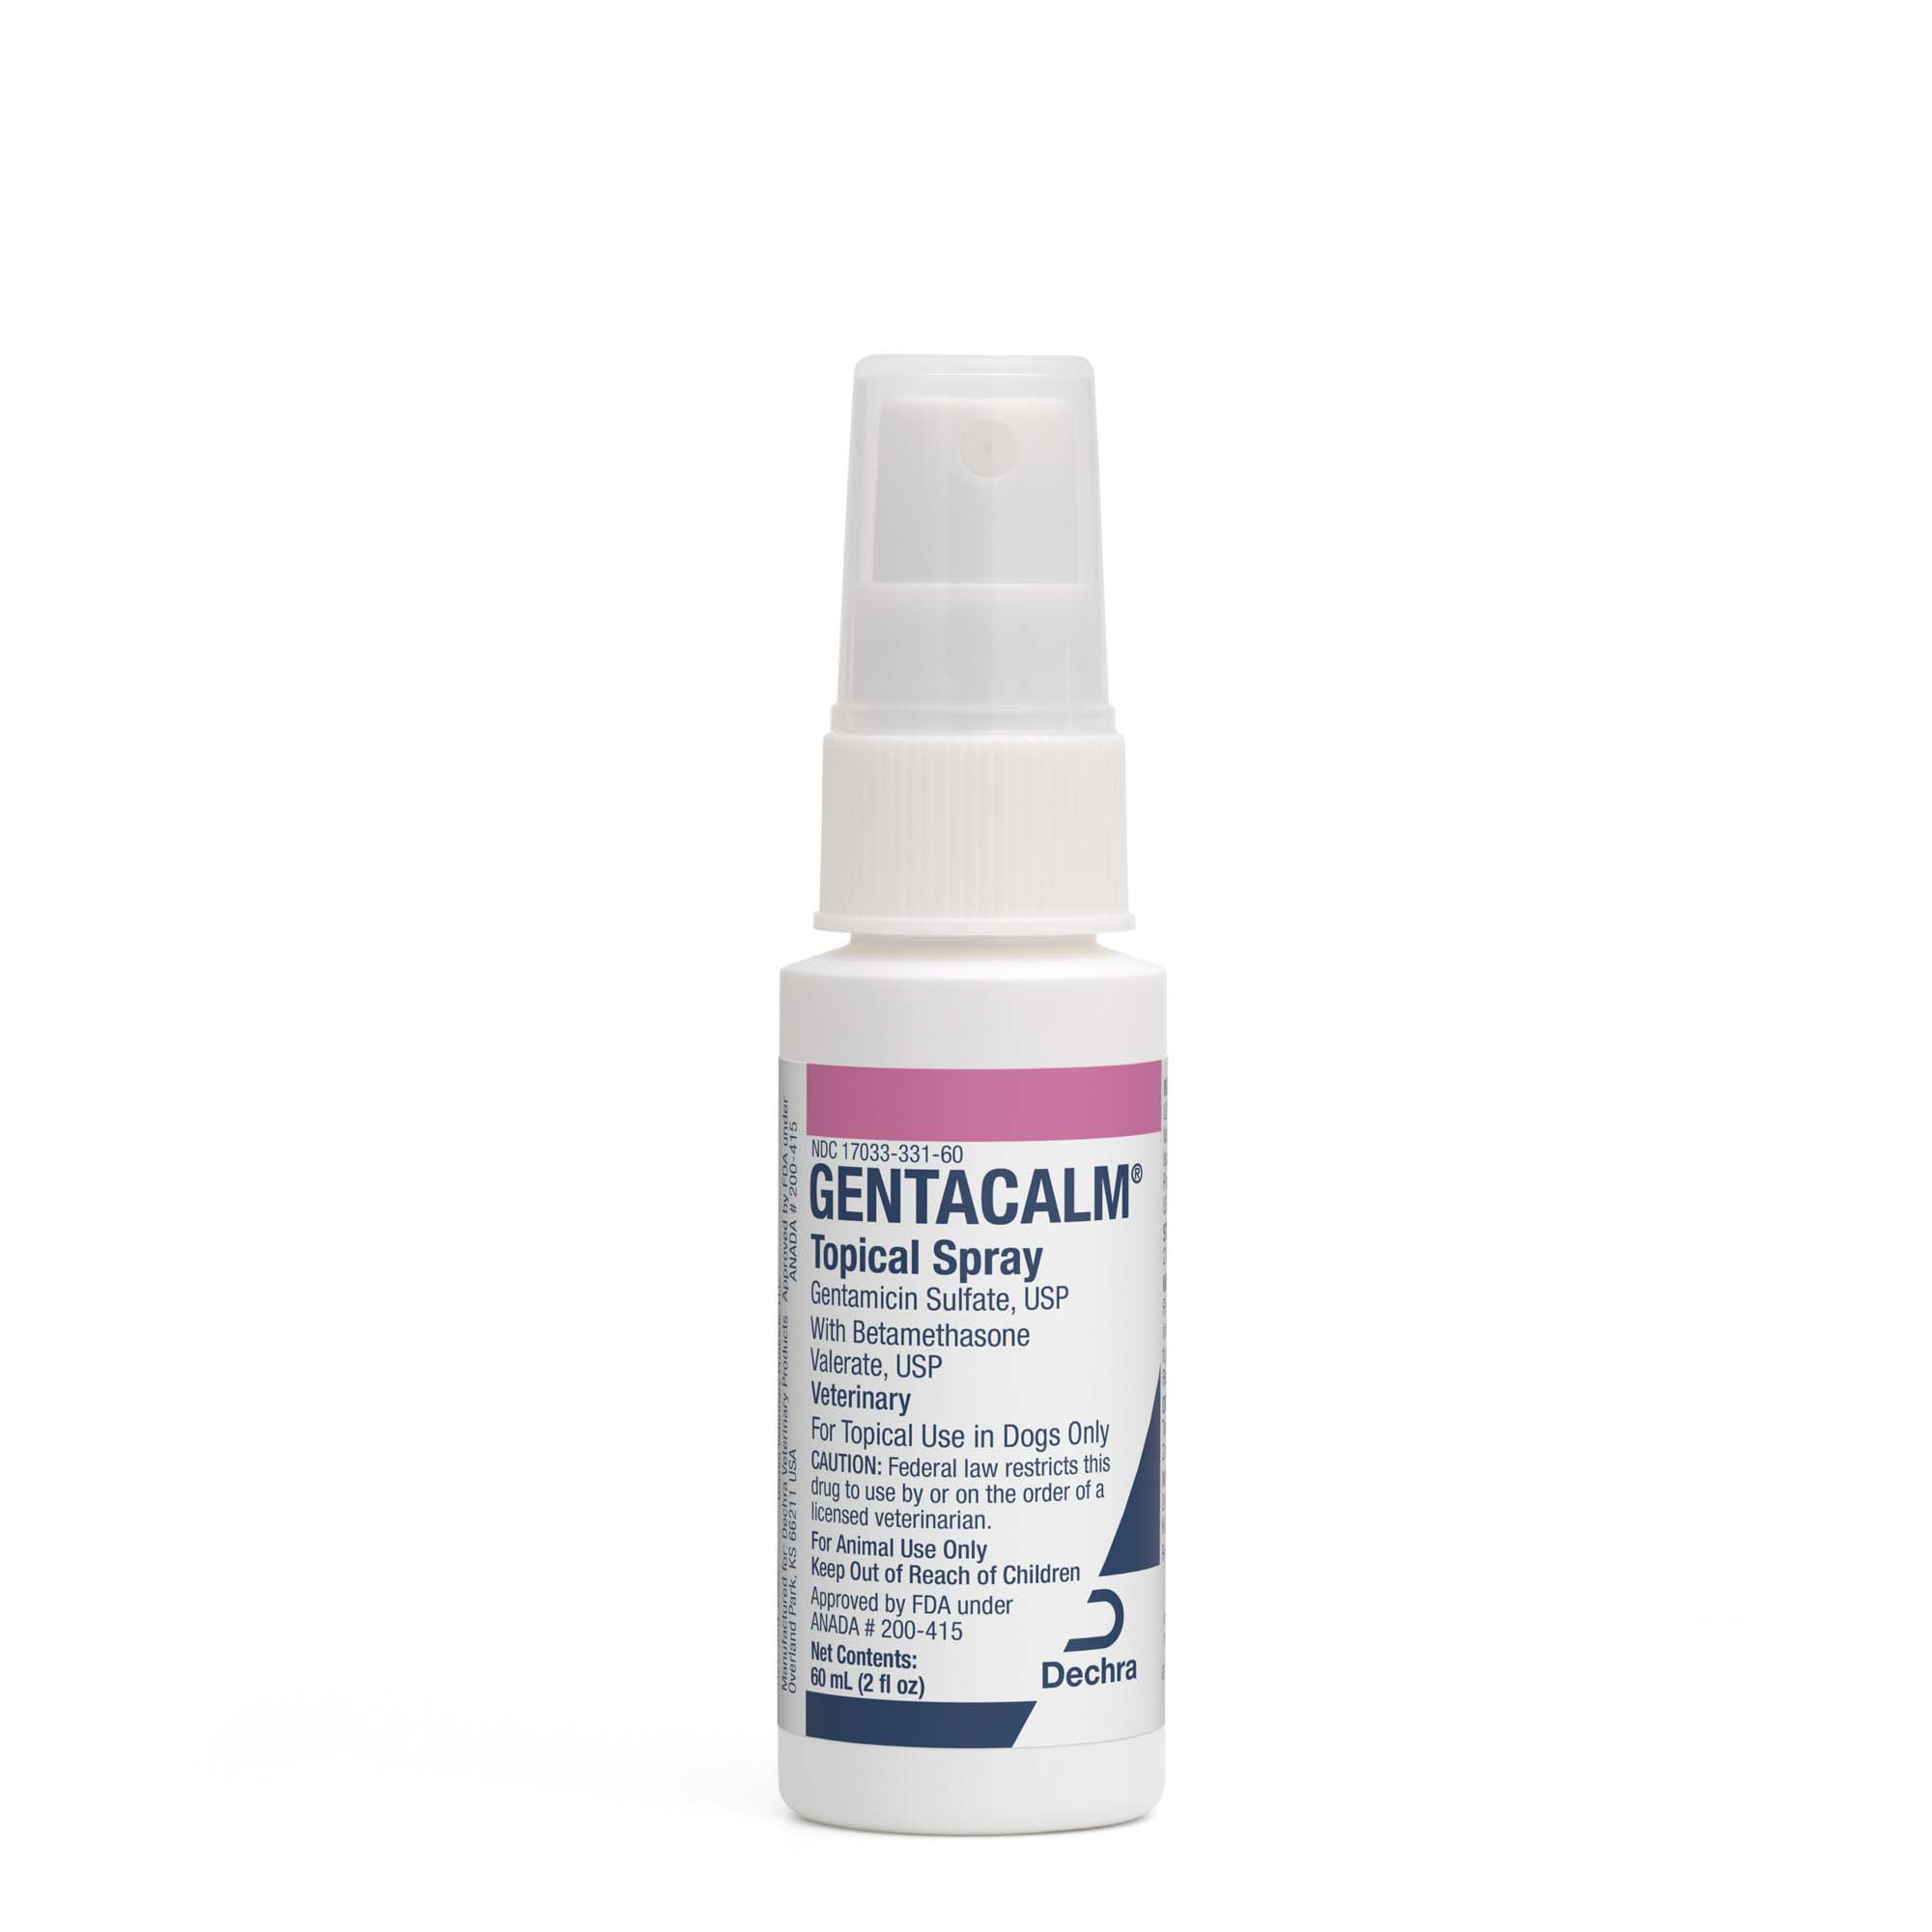 GentaCalm Topical Spray Usage